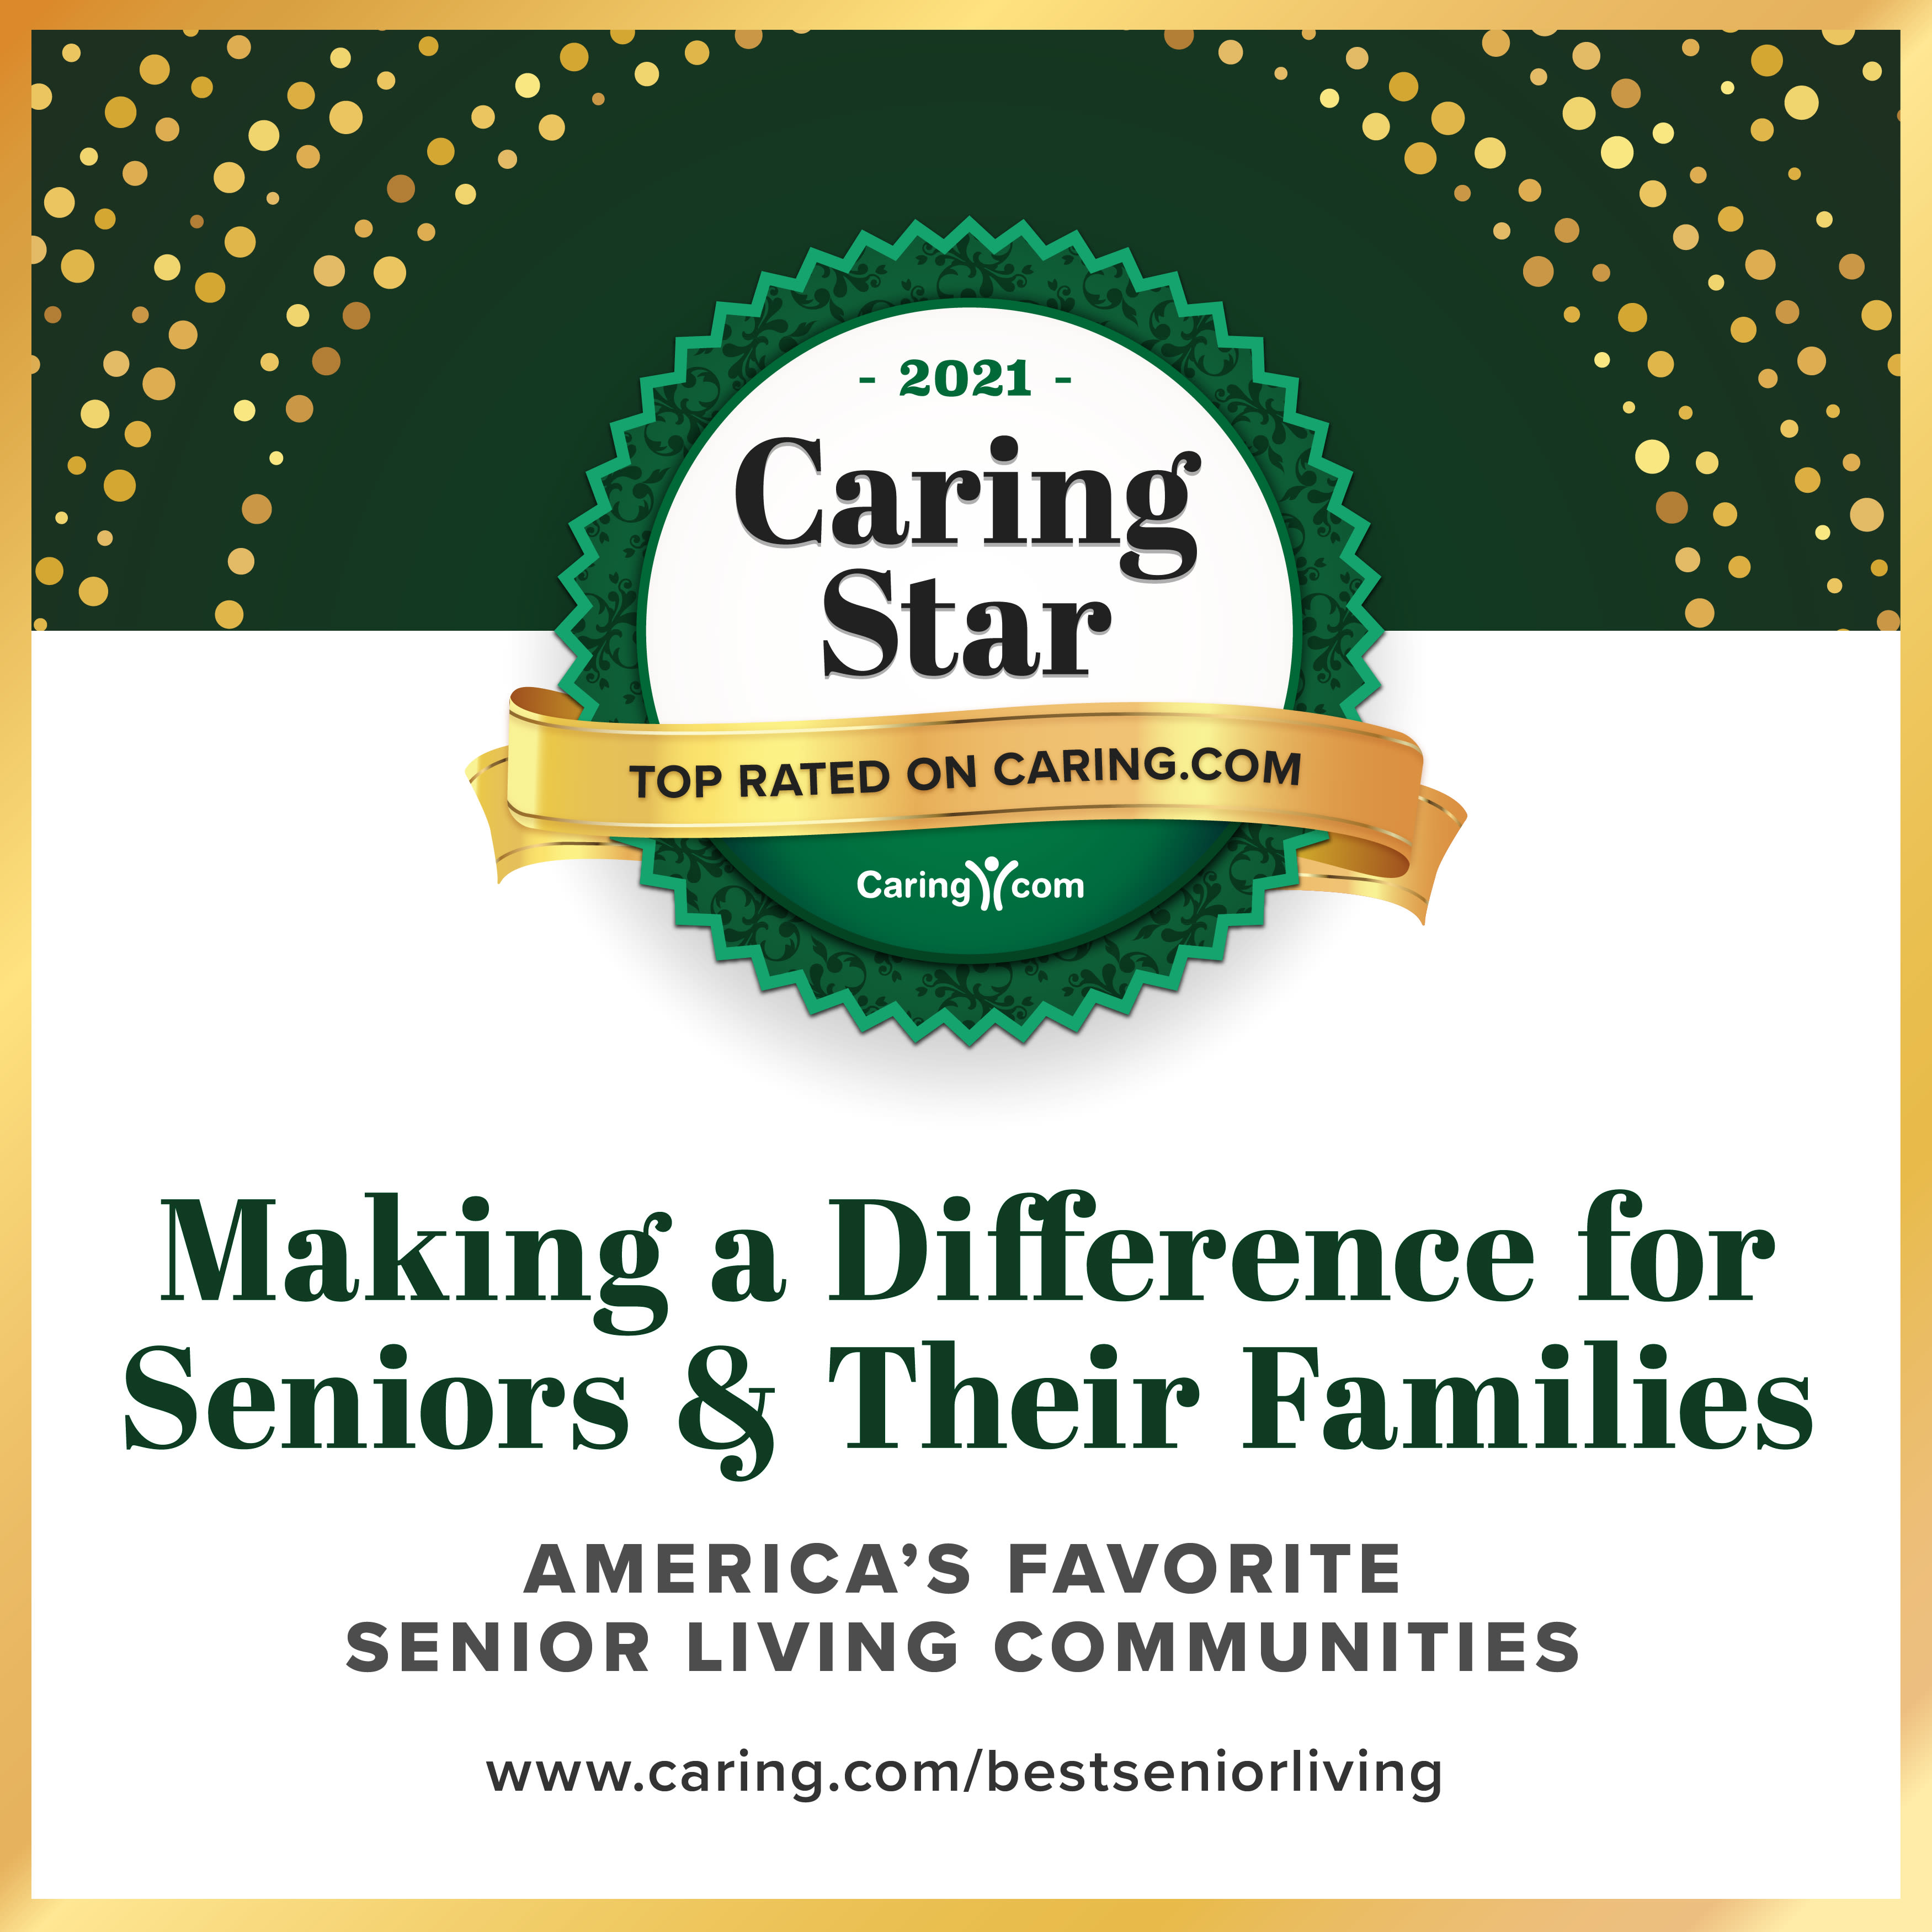 2021 Caring Star Award Winner